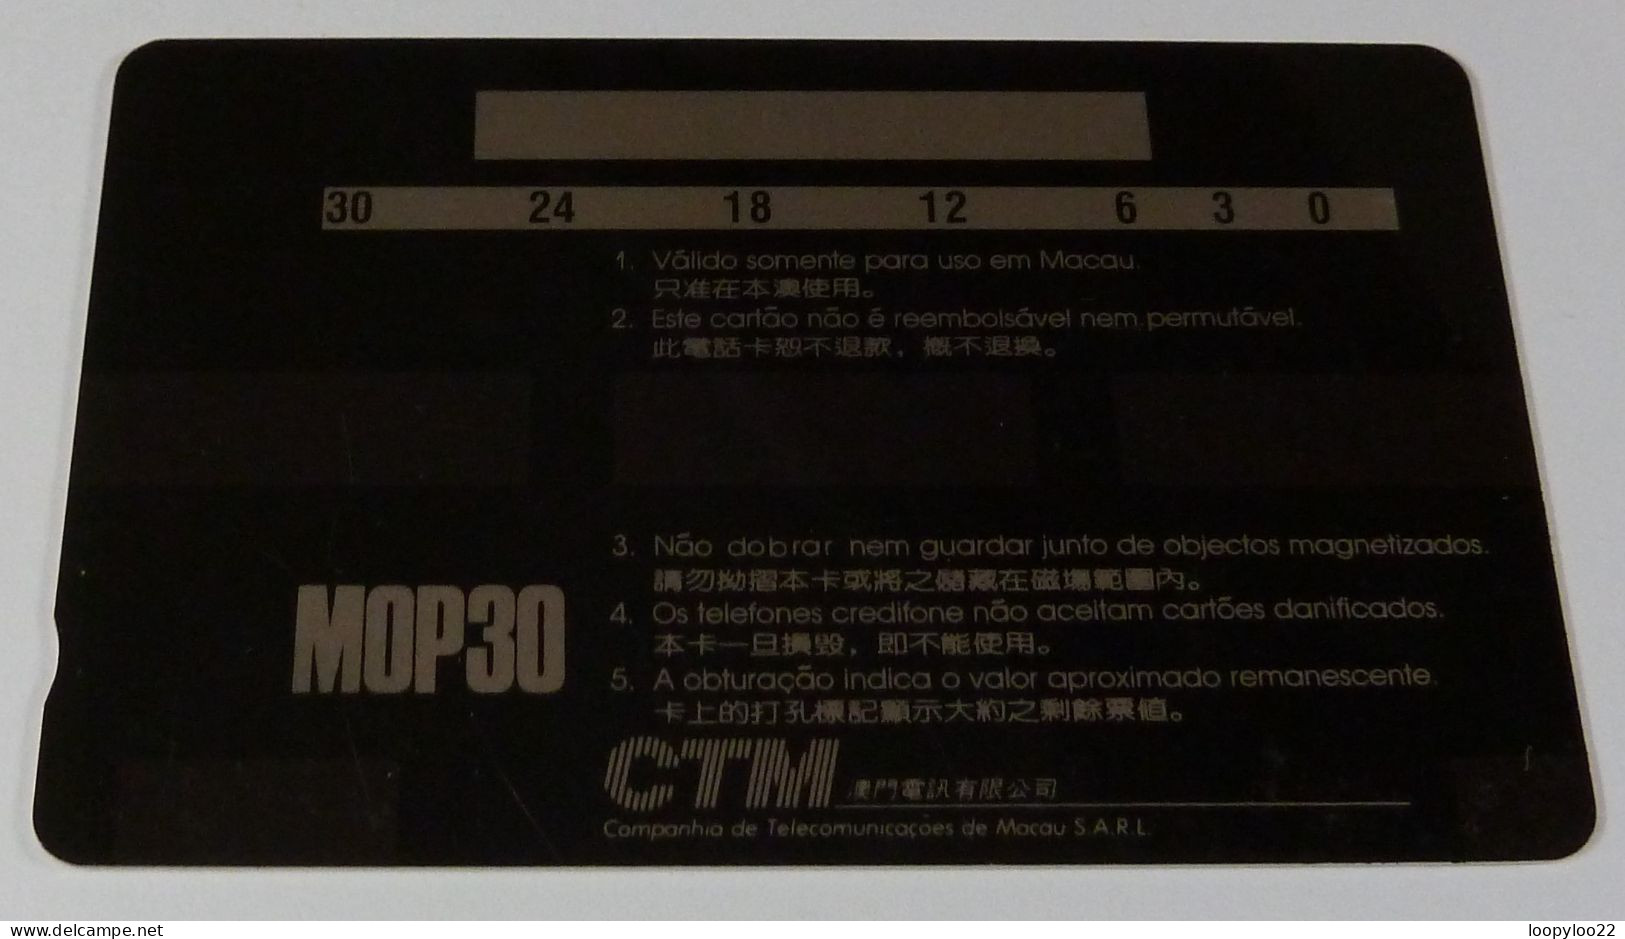 MACAU - GPT - Specimen - CTM - 10th Anniversary - 1981 - 1991 - Macao